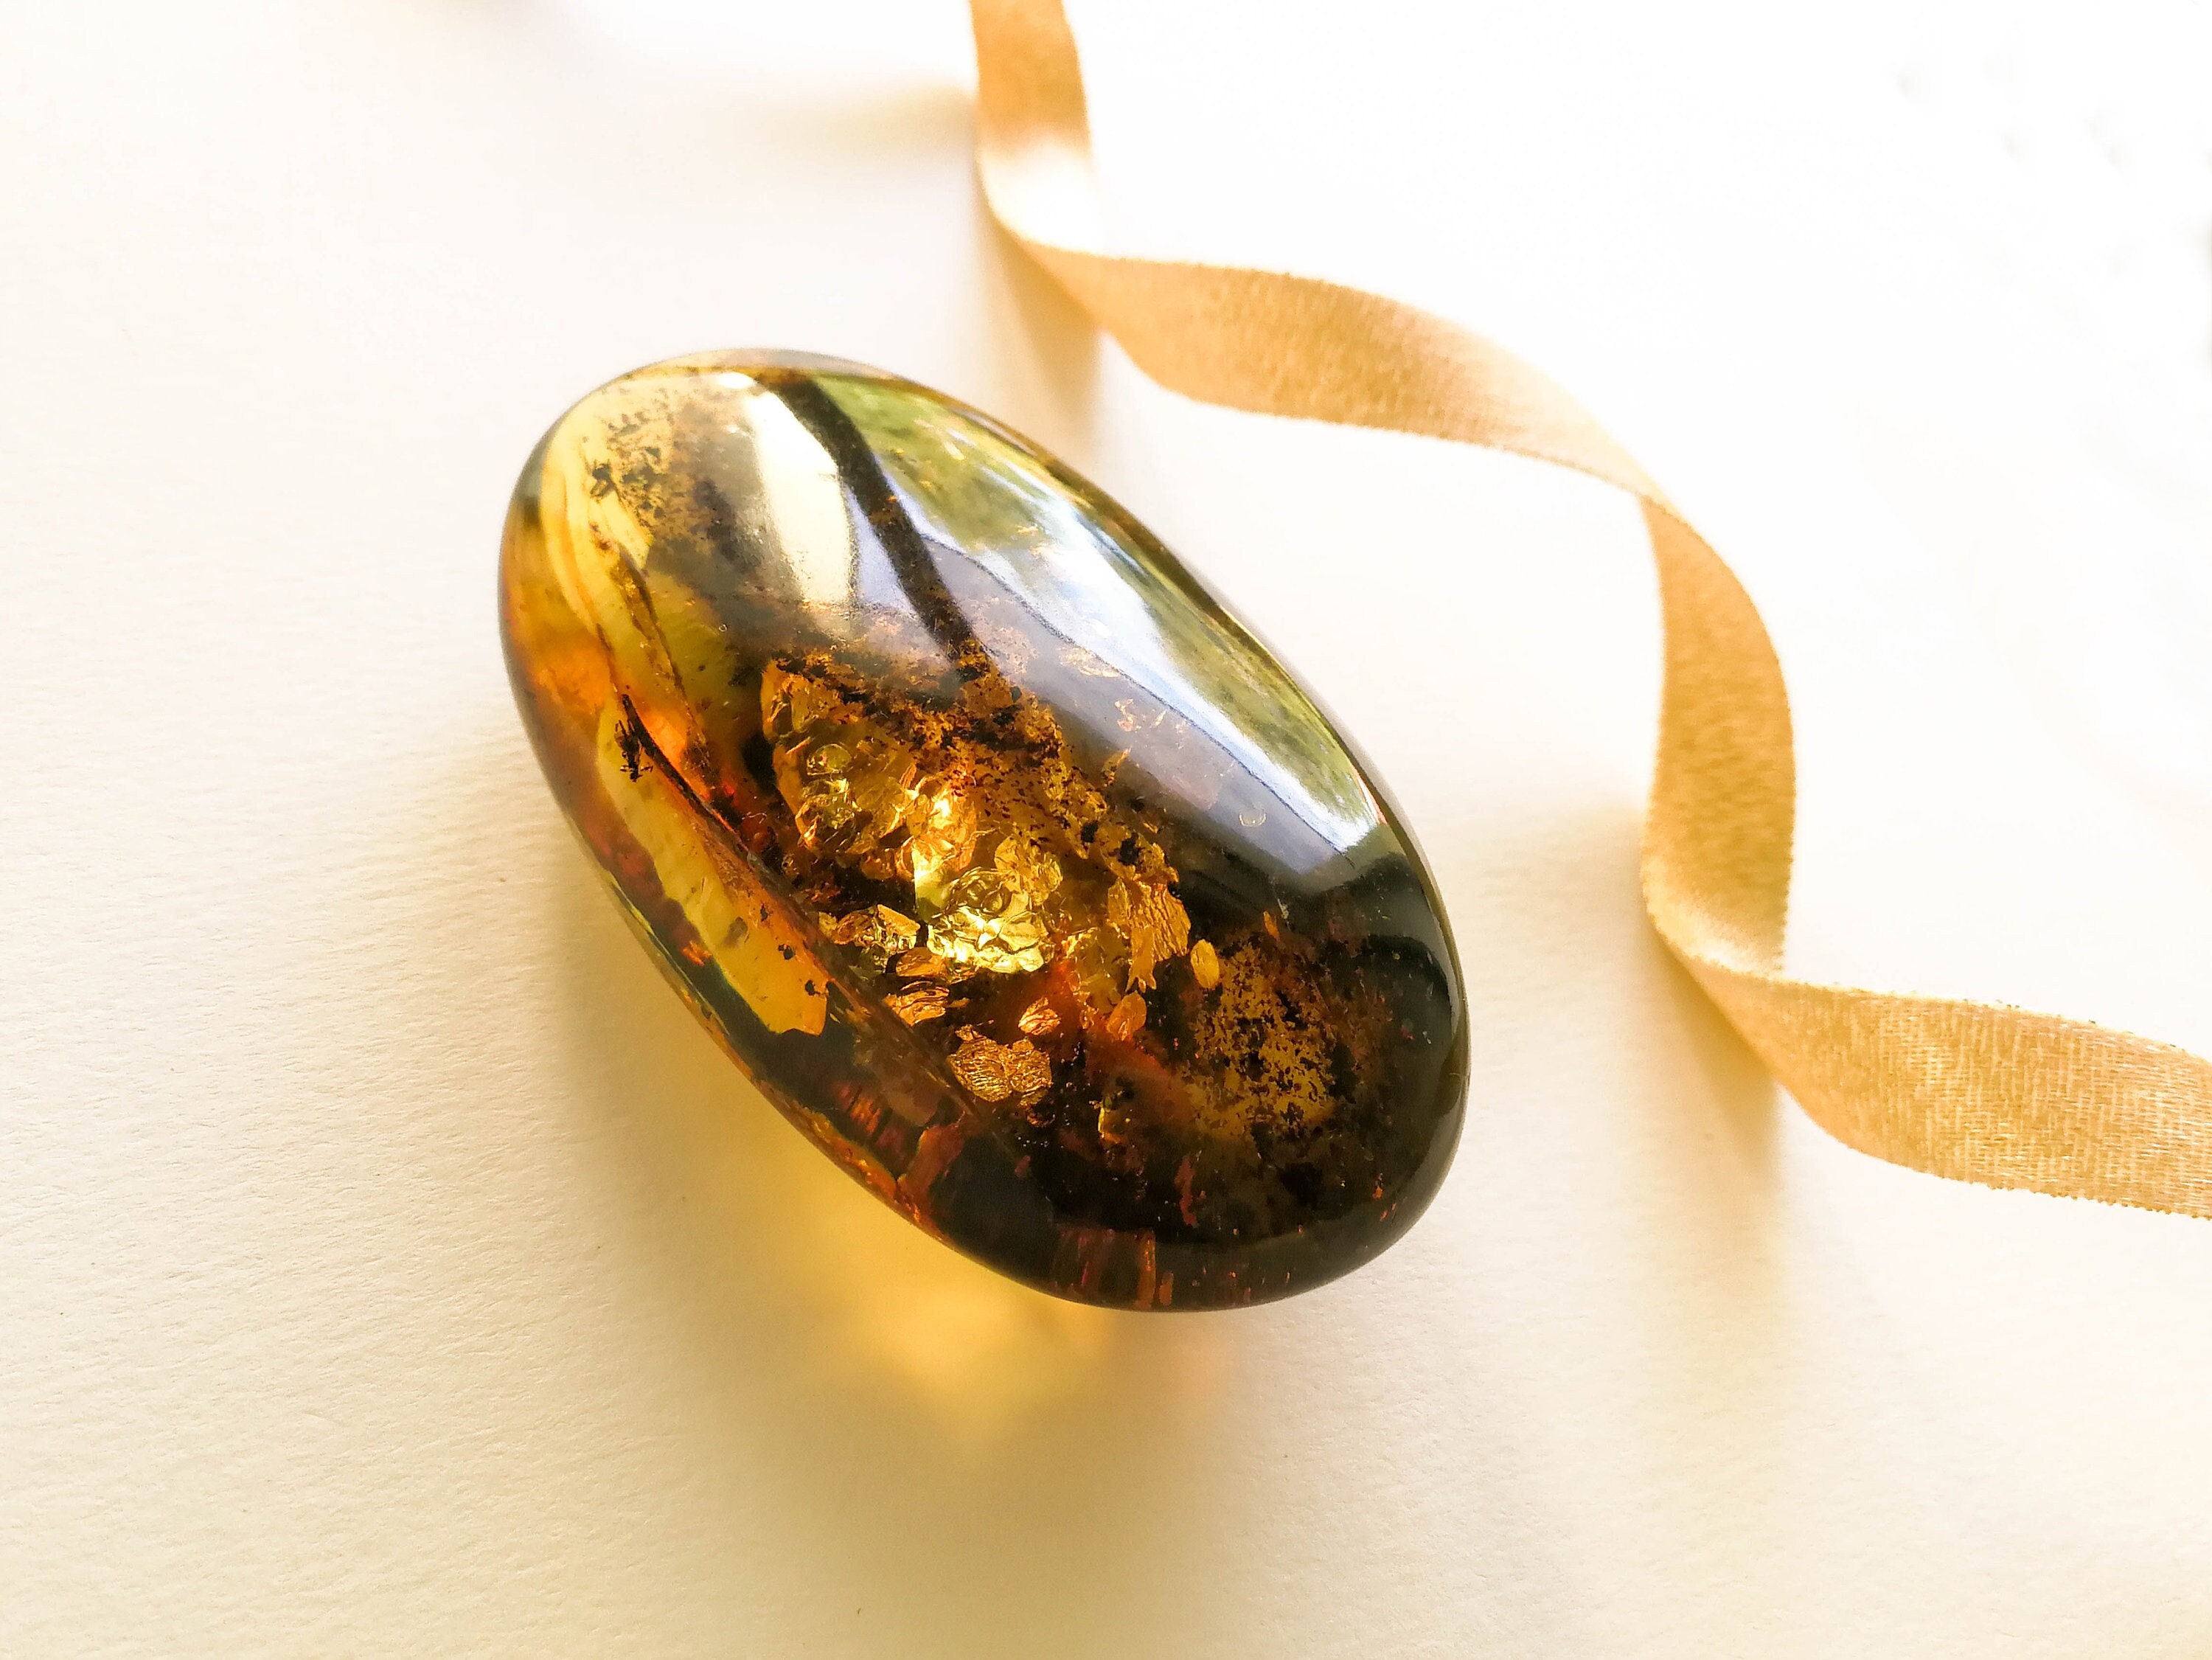 Large Original Oval Shape Natural Amber Resin Souvenir, Dark